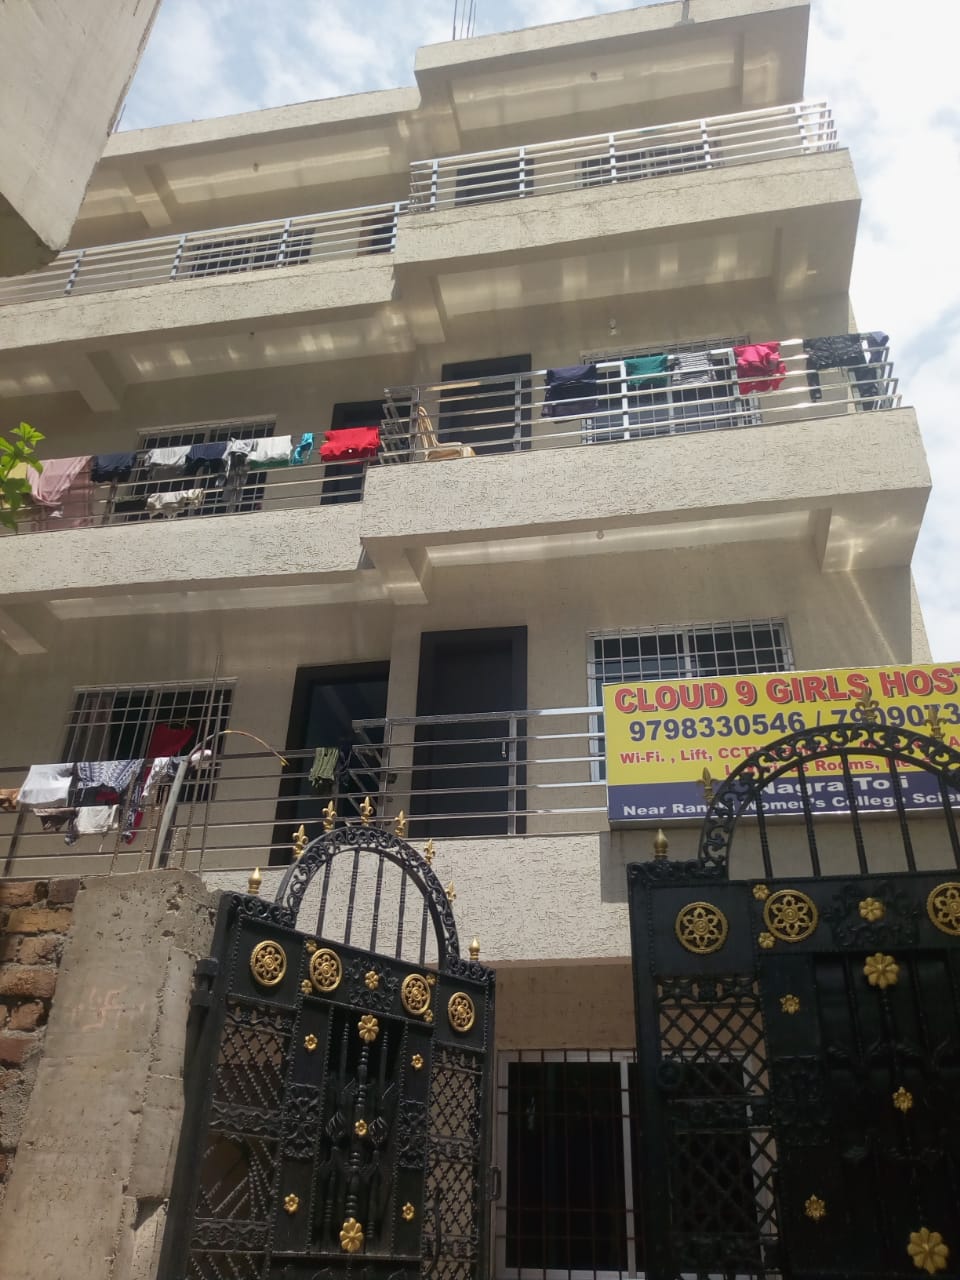 Girls hostel nearest Biome institute ranchi